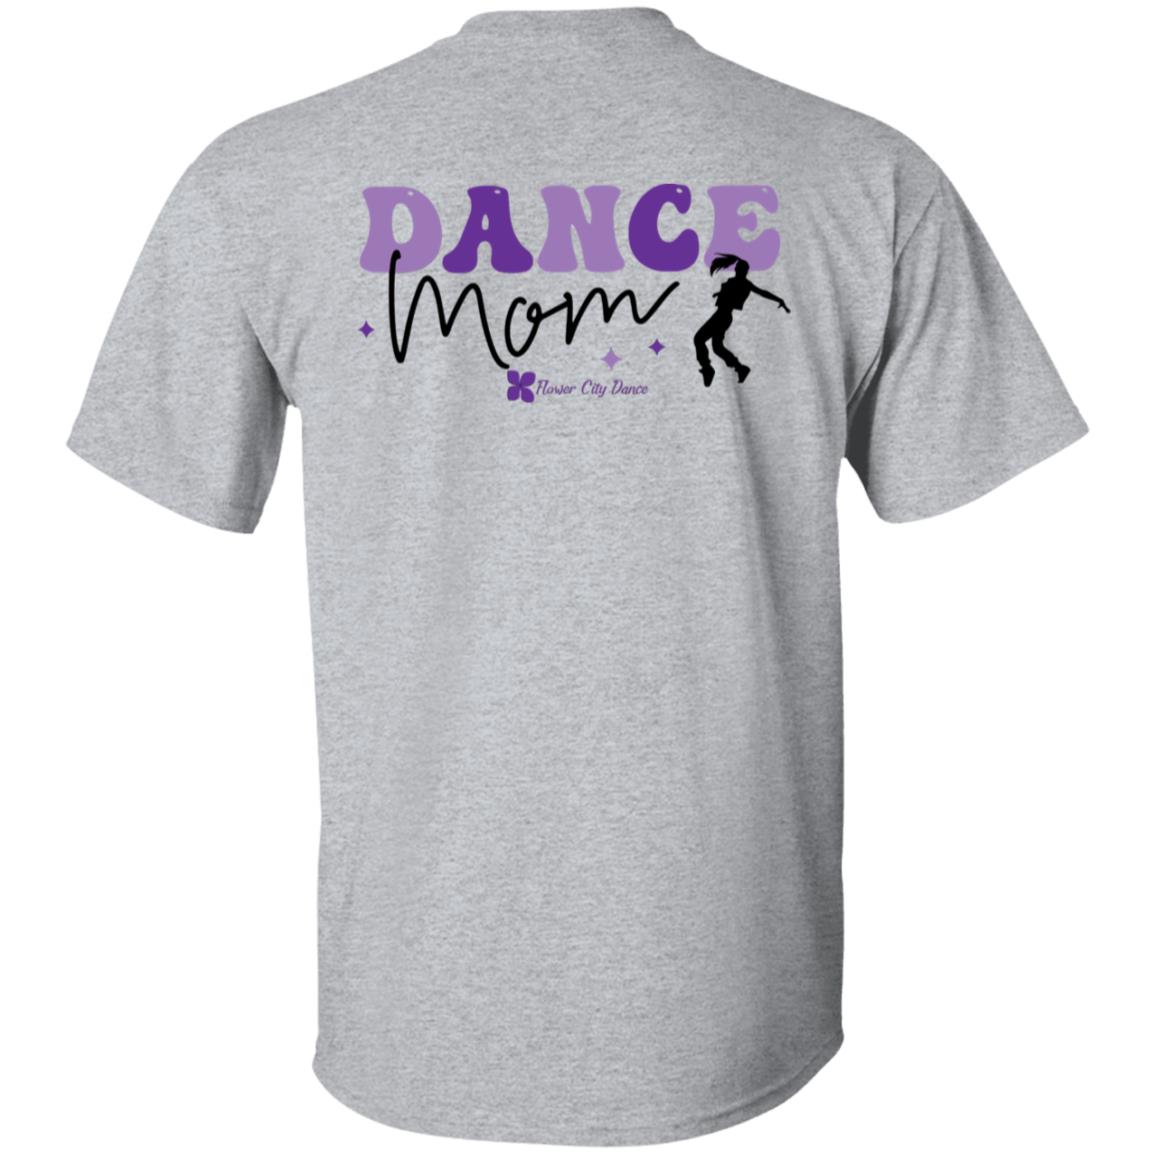 FCD Dance Mom Era 100% Cotton T-Shirt